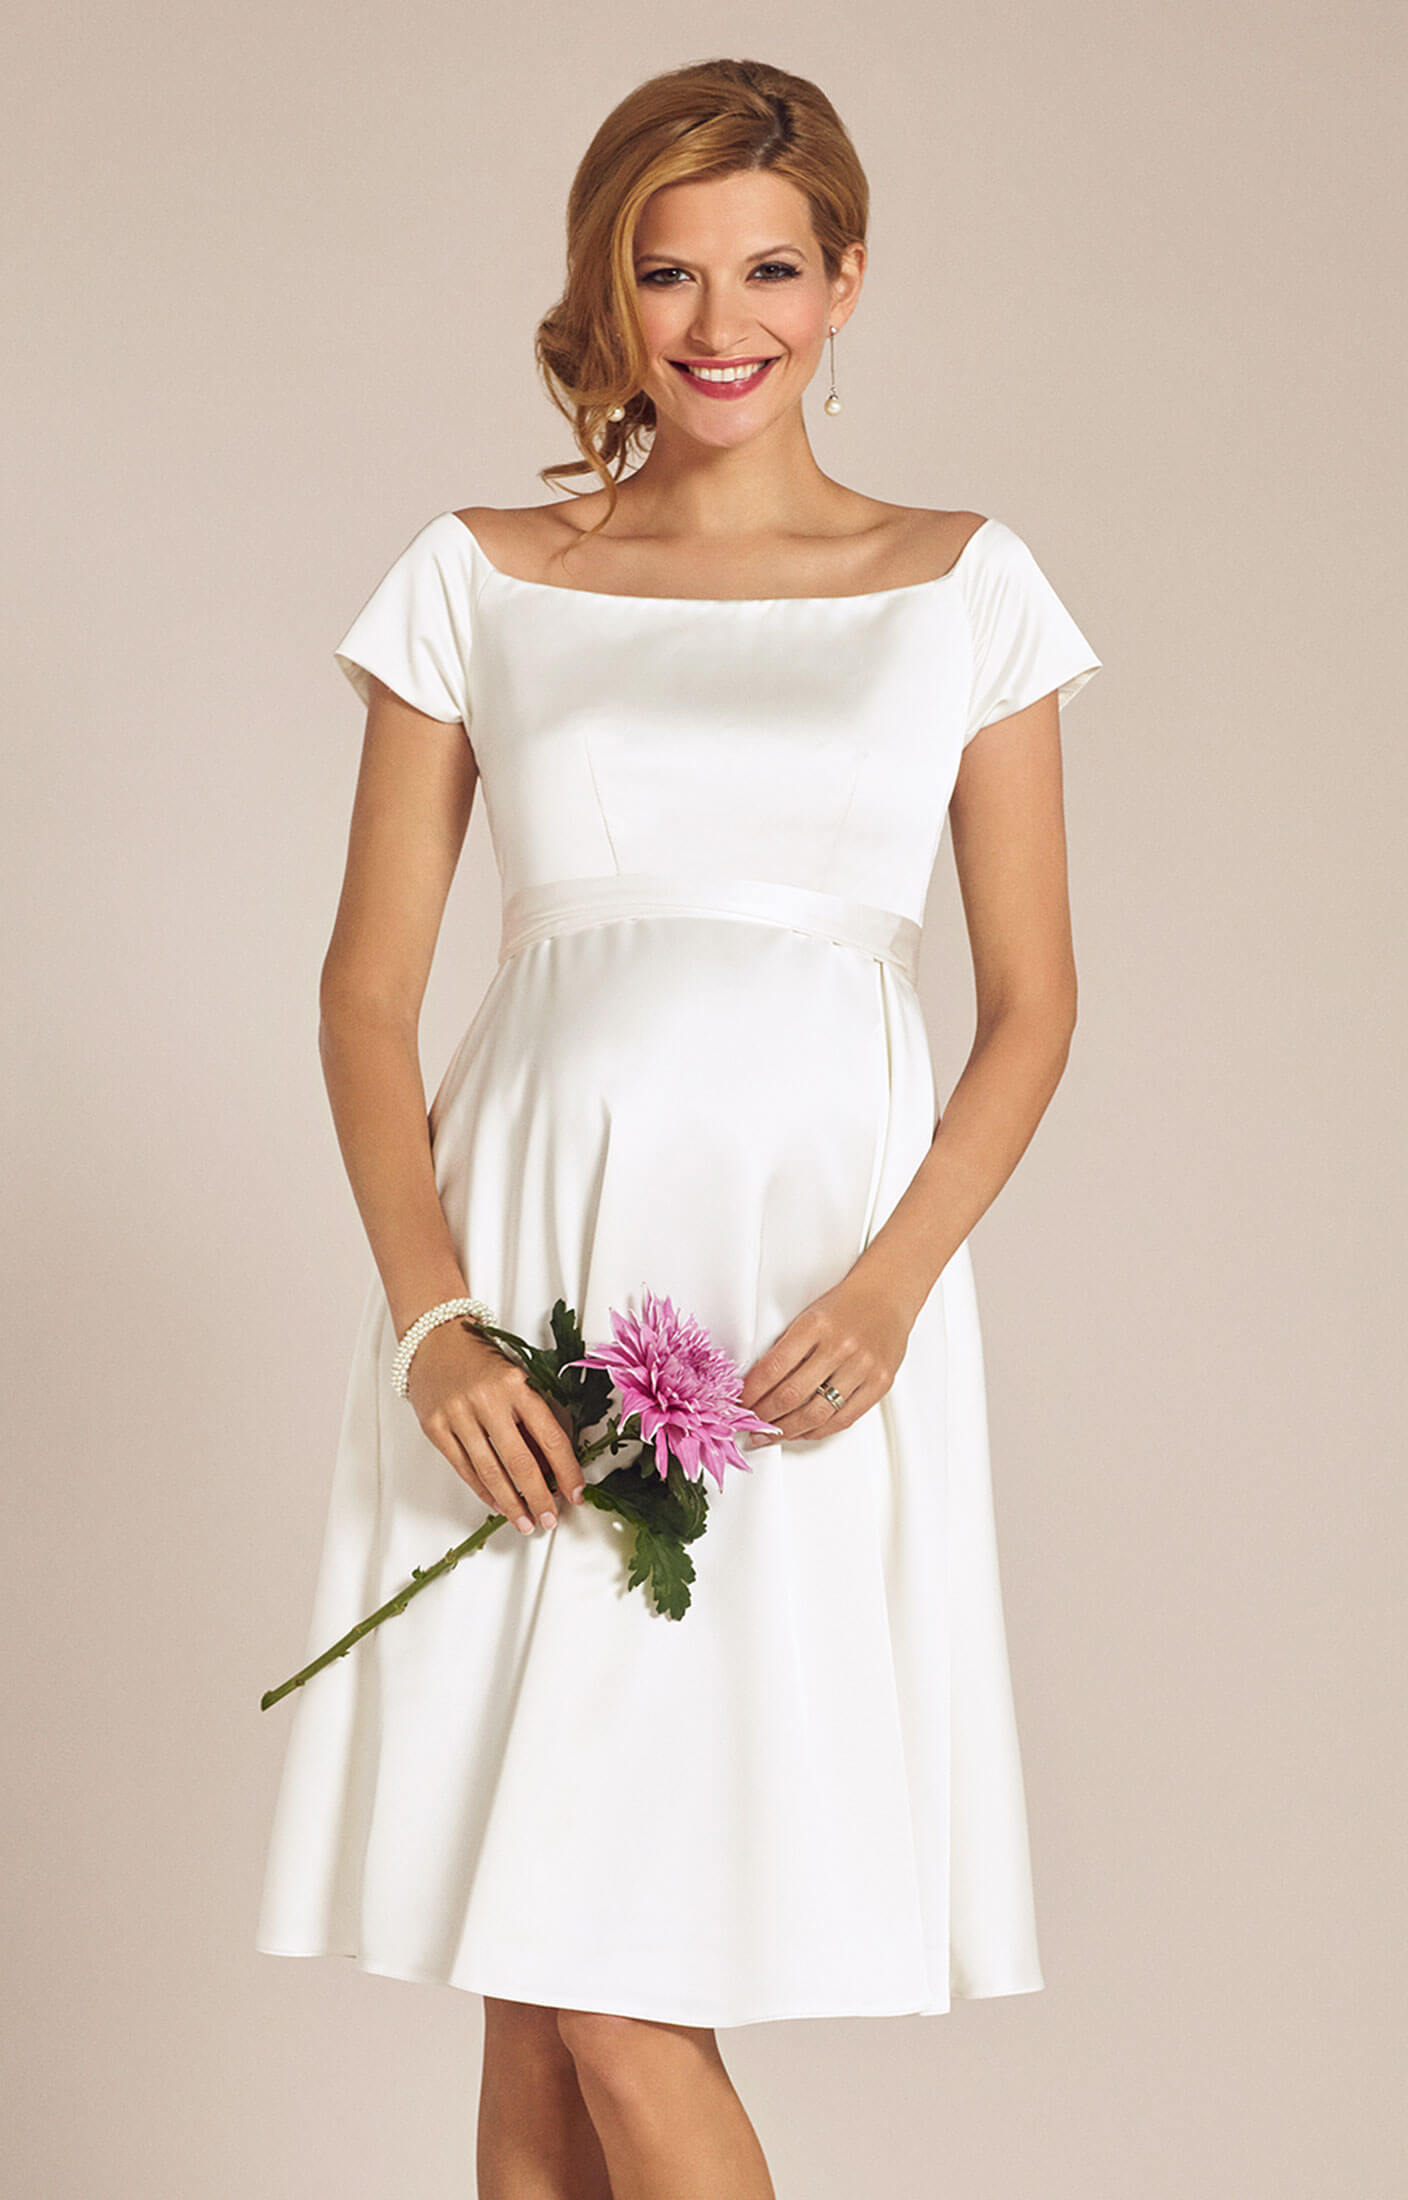 Best Price on Tiffany Rose Ivory Satin Maternity Dress Aria | Free Ship ...